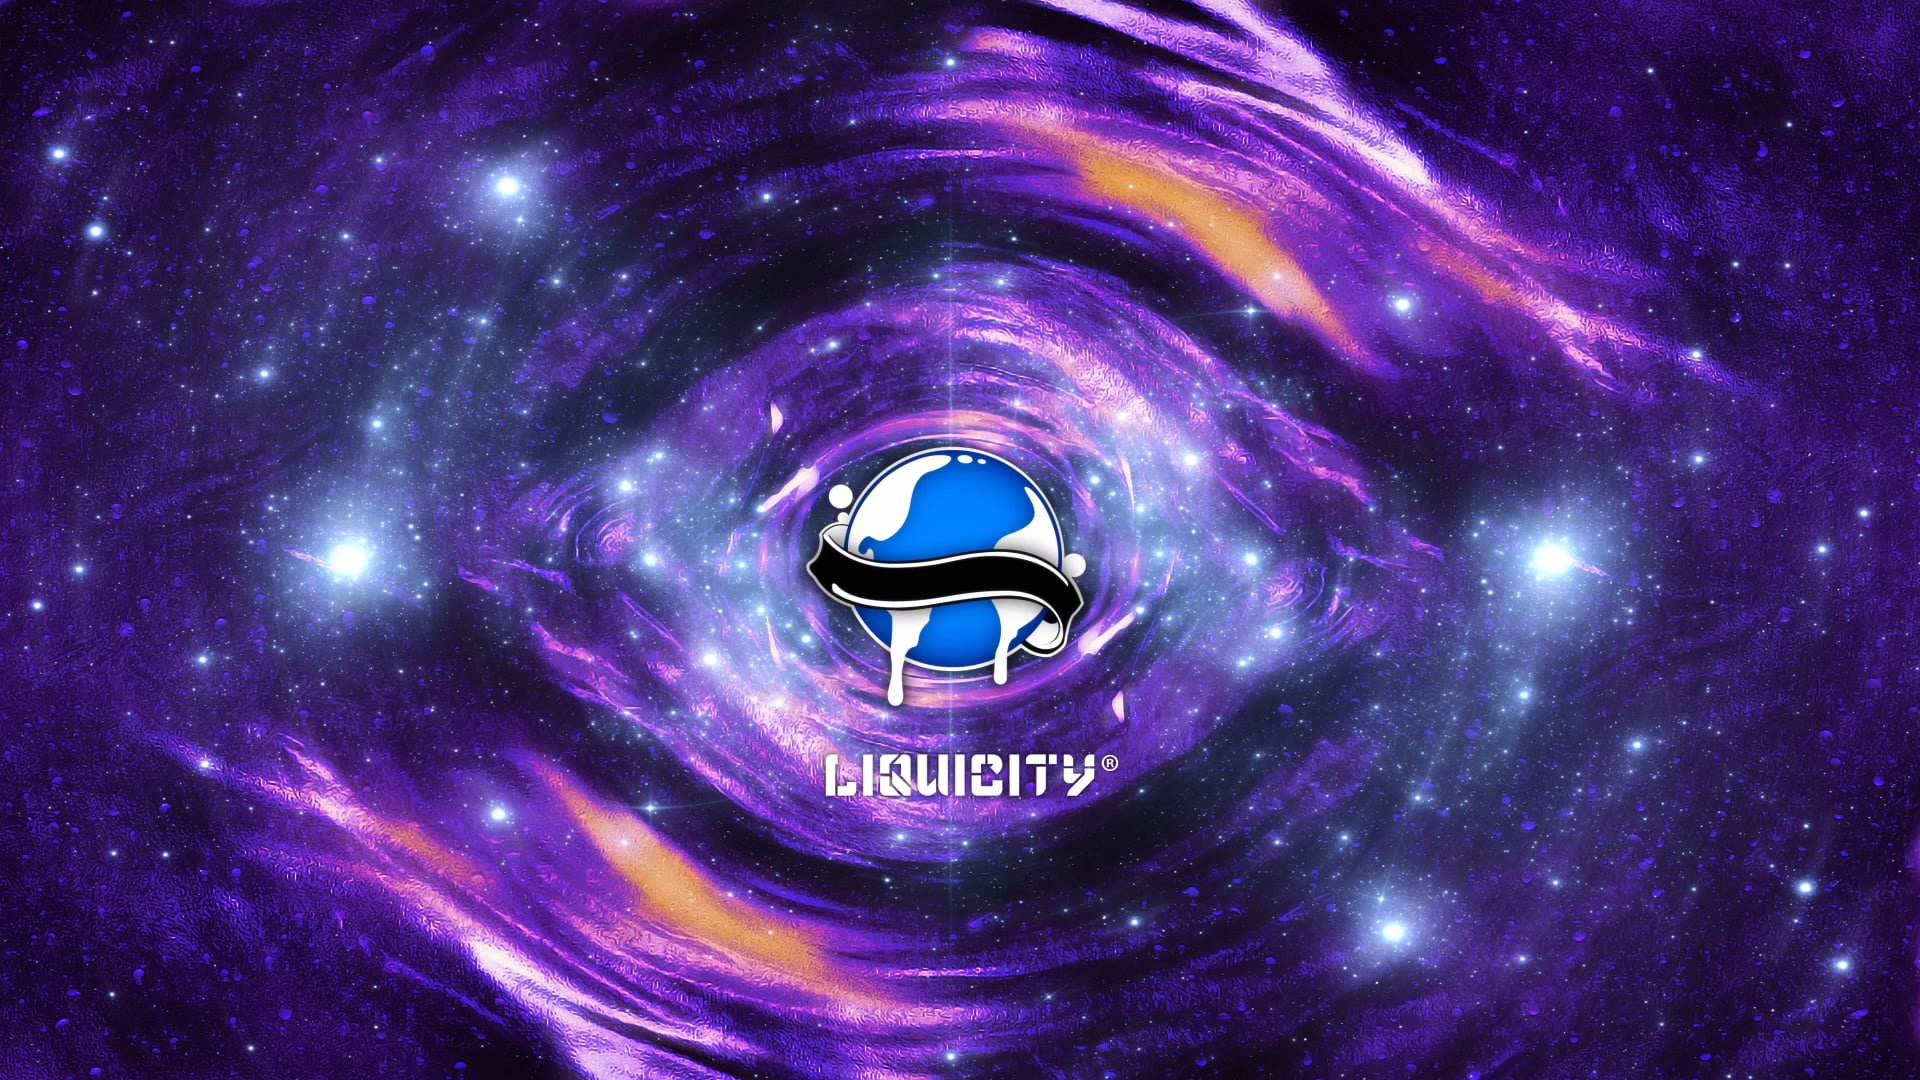 Liquicity digital wallpaper, Liquicity, space, sky, colorful